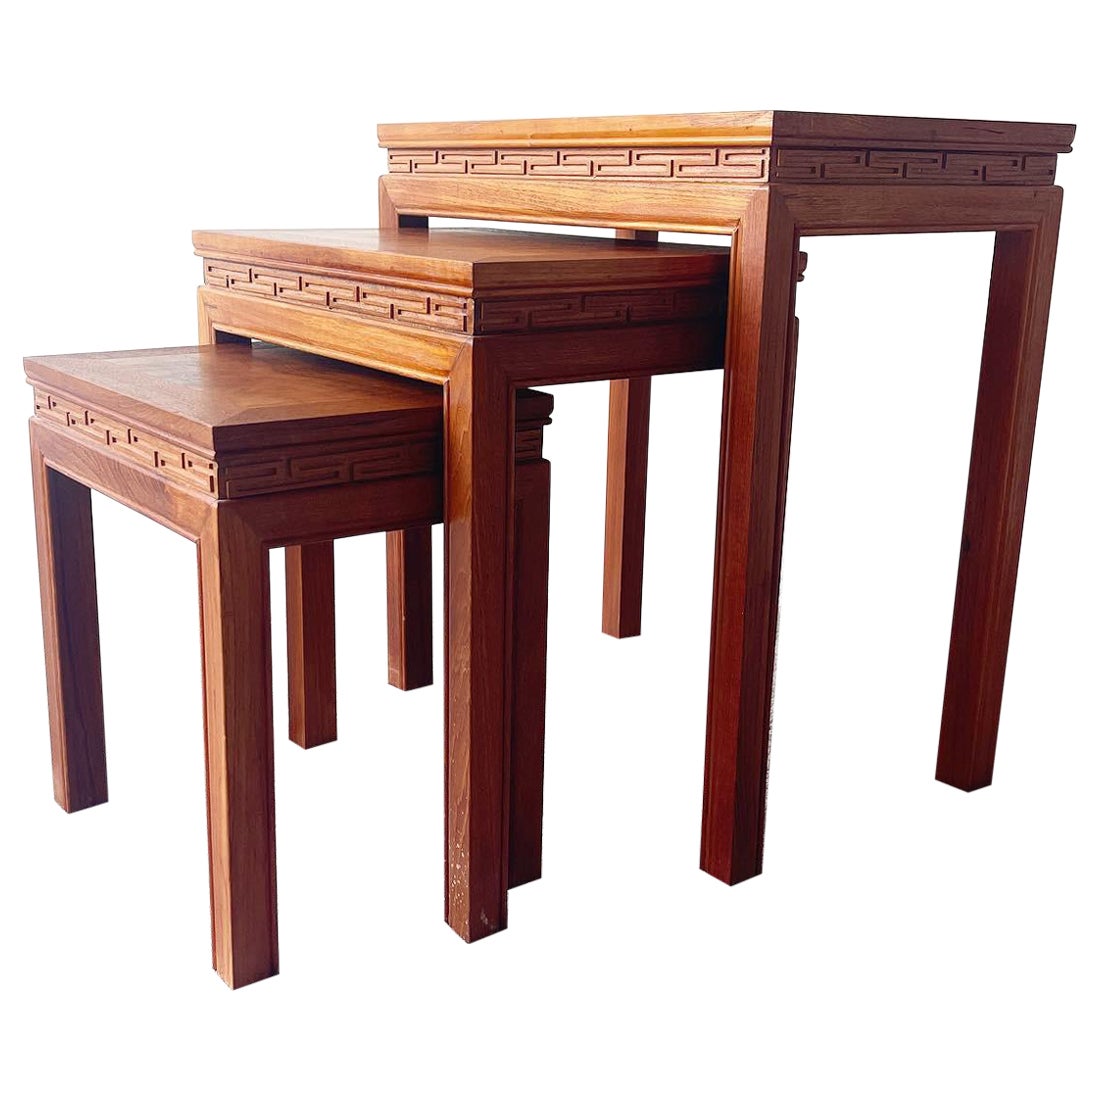 Tavolini asiatici in legno intagliati a mano in stile cineseria